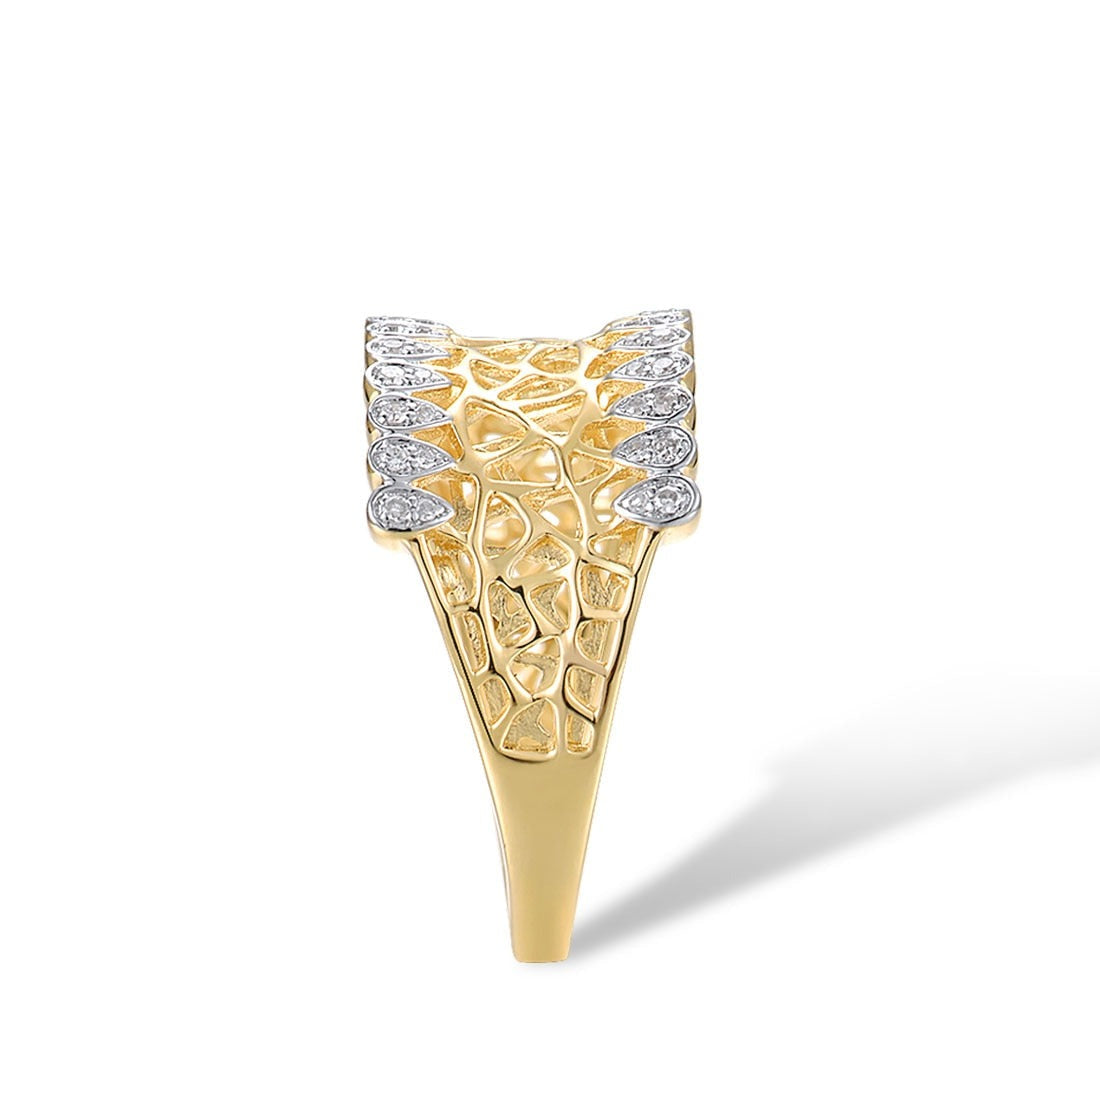 Natural Diamond Luxury Rings. 14K Yellow Gold.